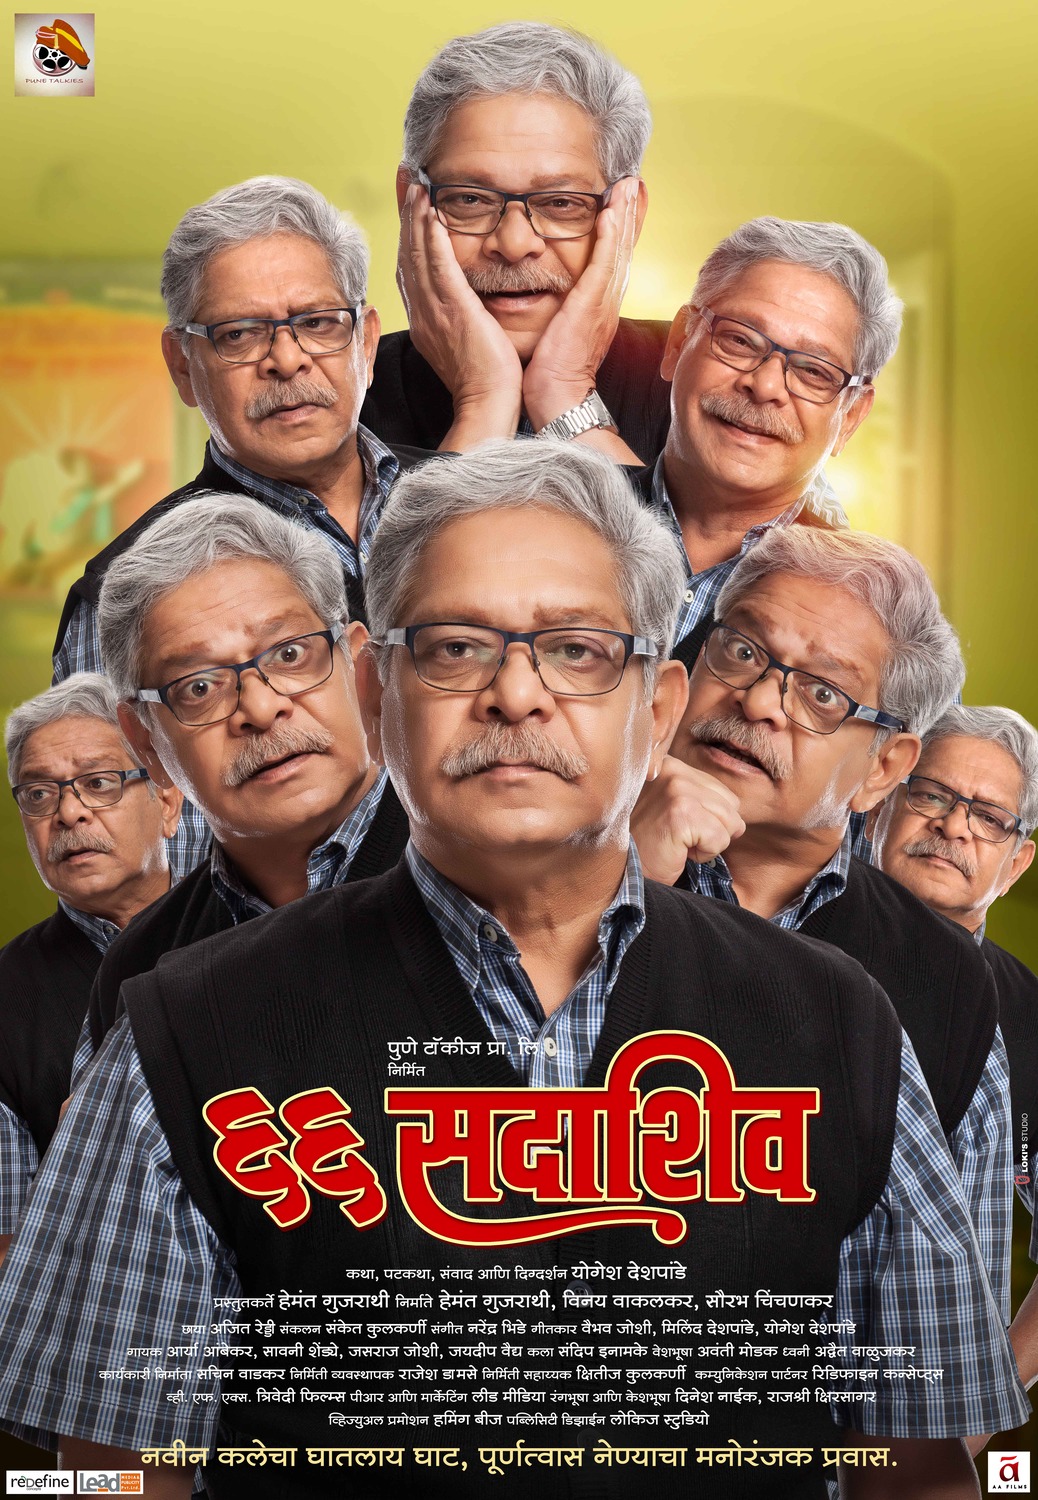 Extra Large Movie Poster Image for 66 Sadashiv (#1 of 8)